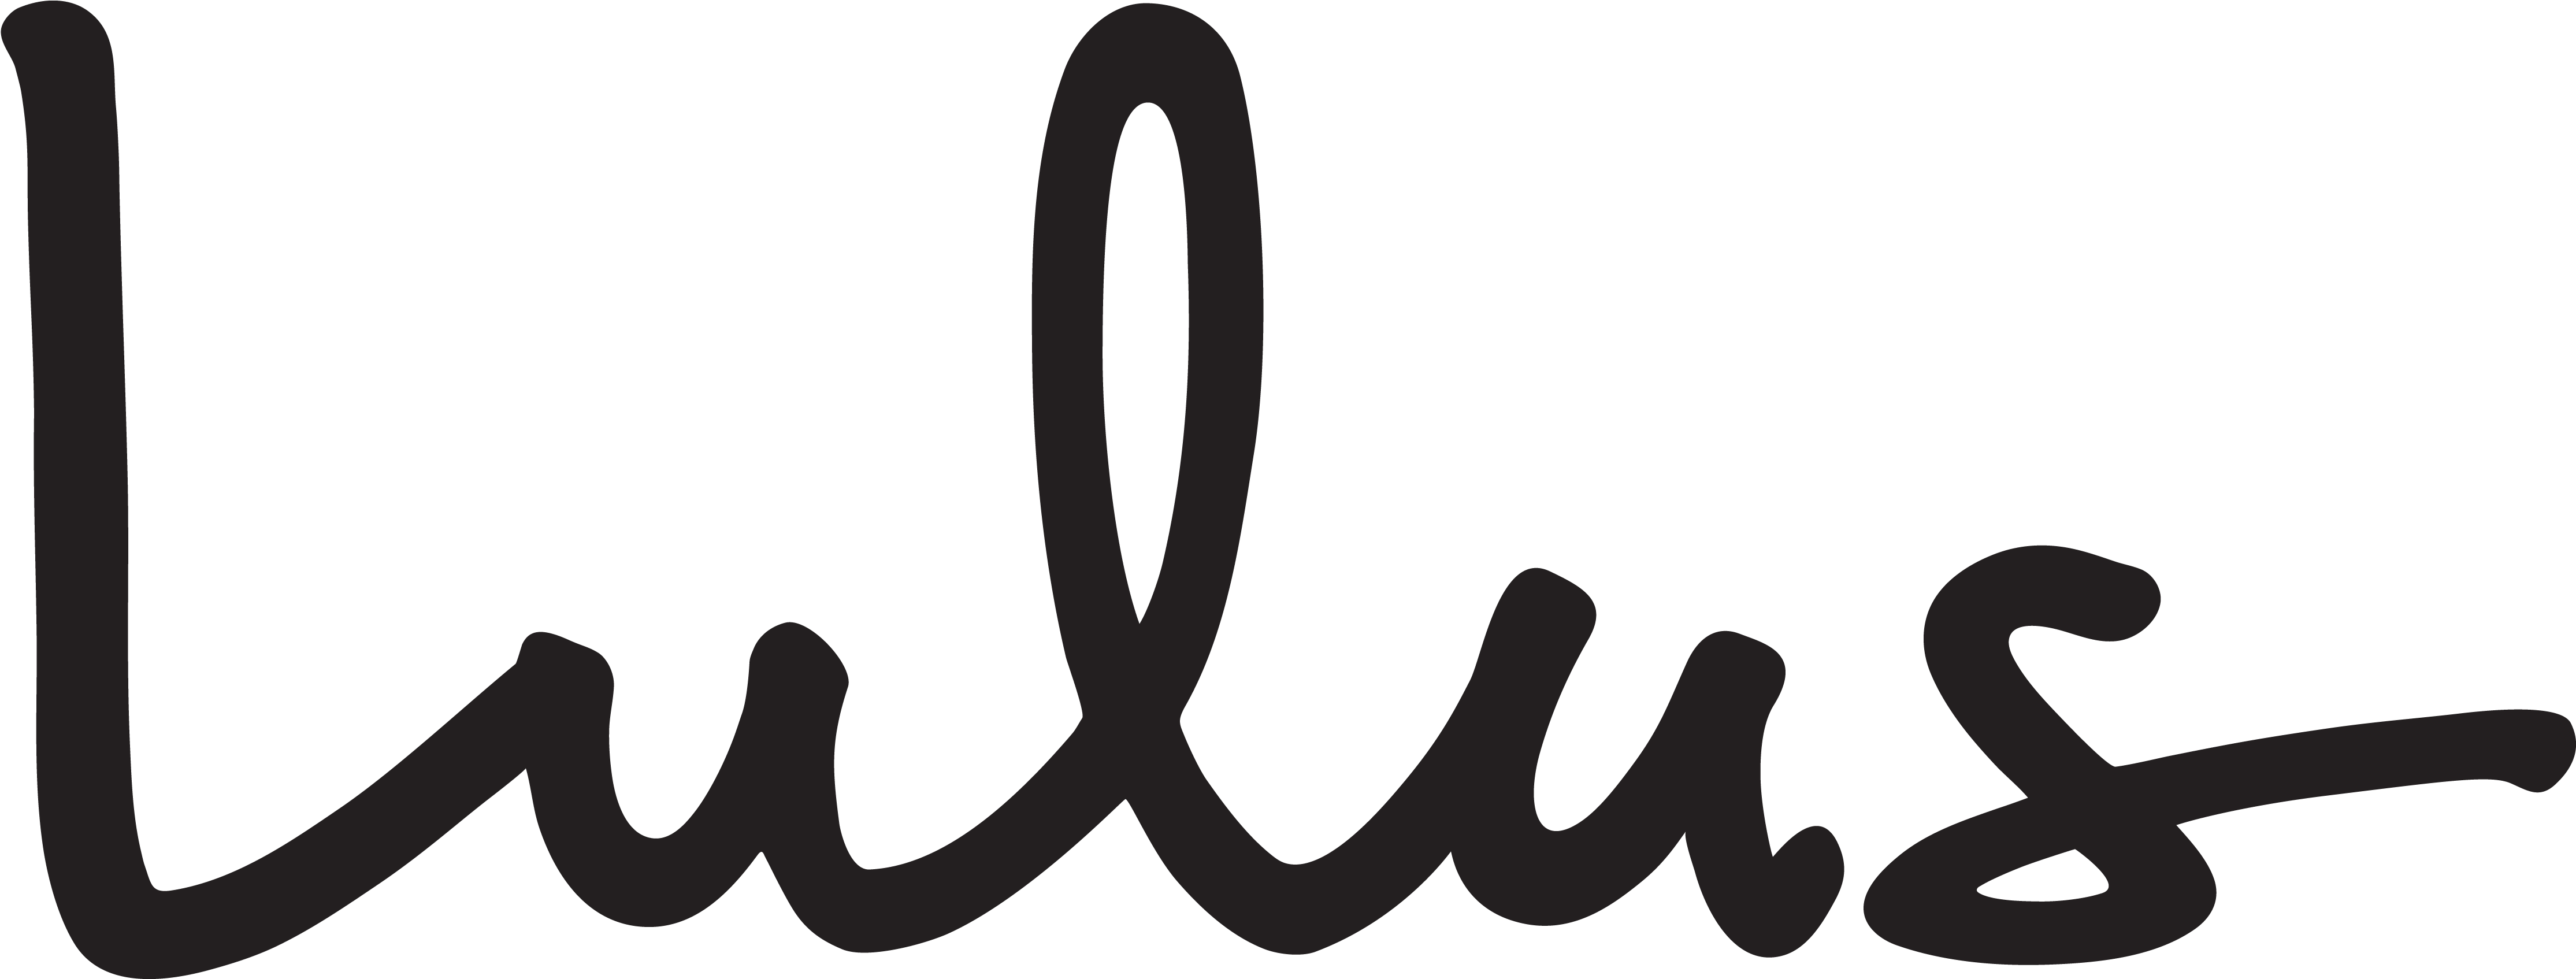 Lulus Fashion Brand Logo